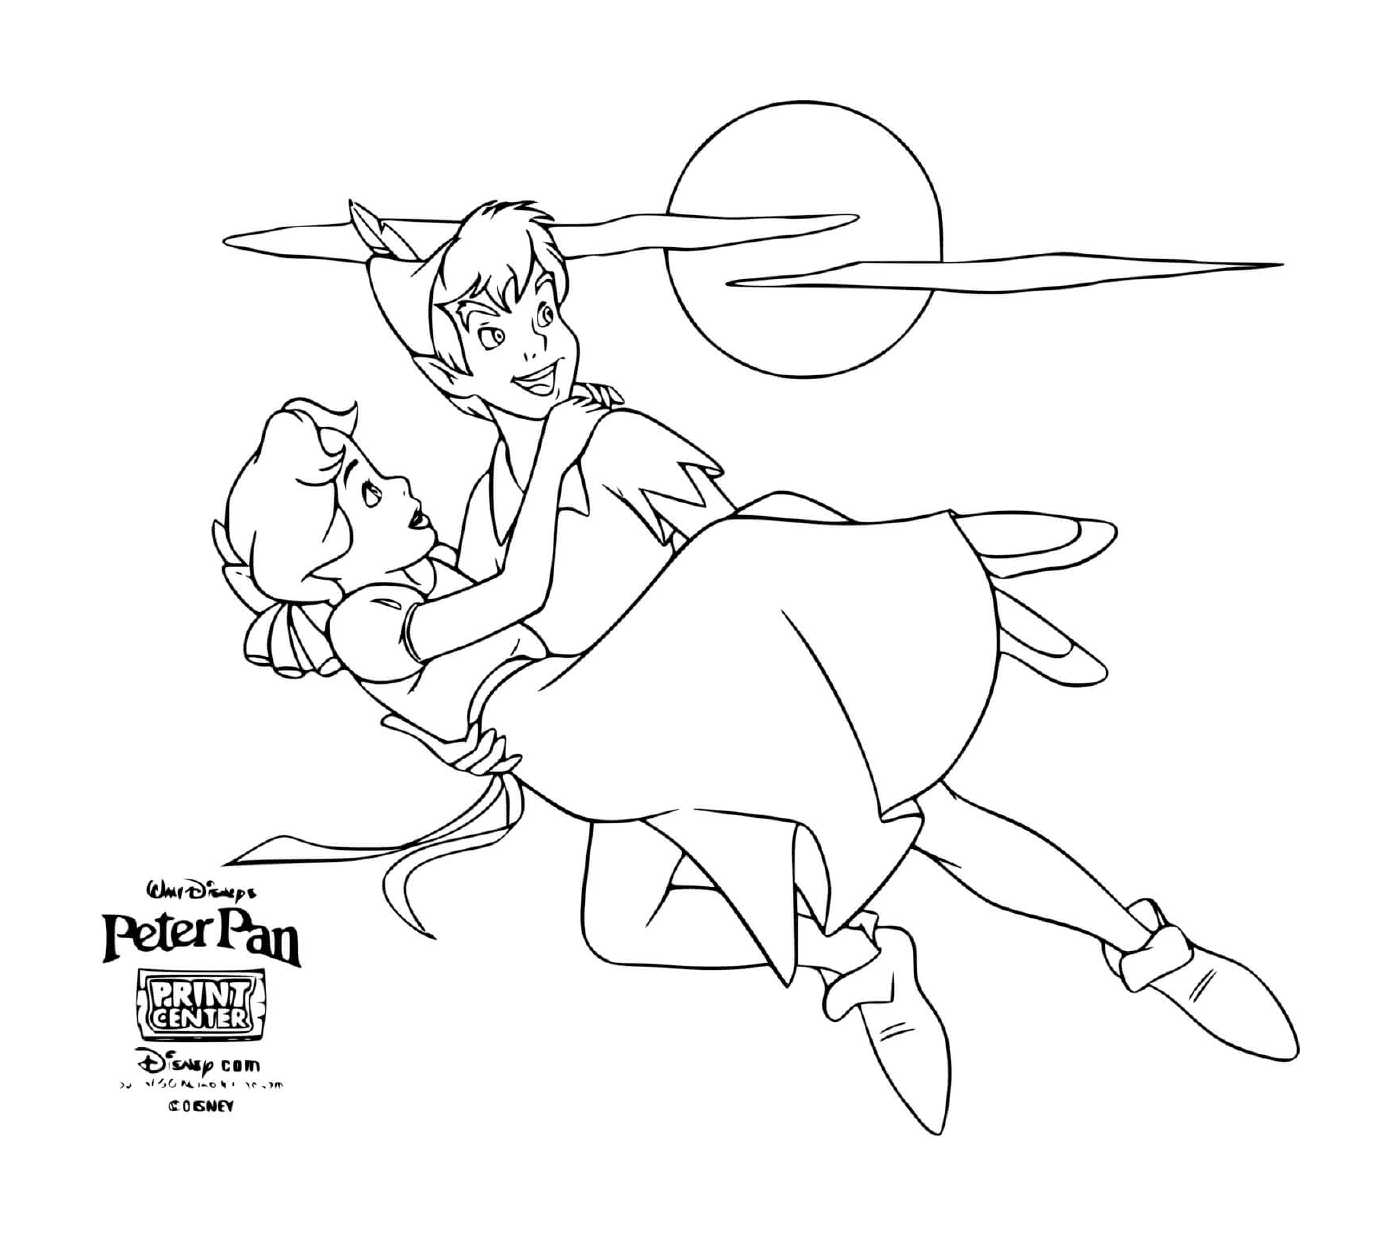  Peter Pan saves Princess Wendy 